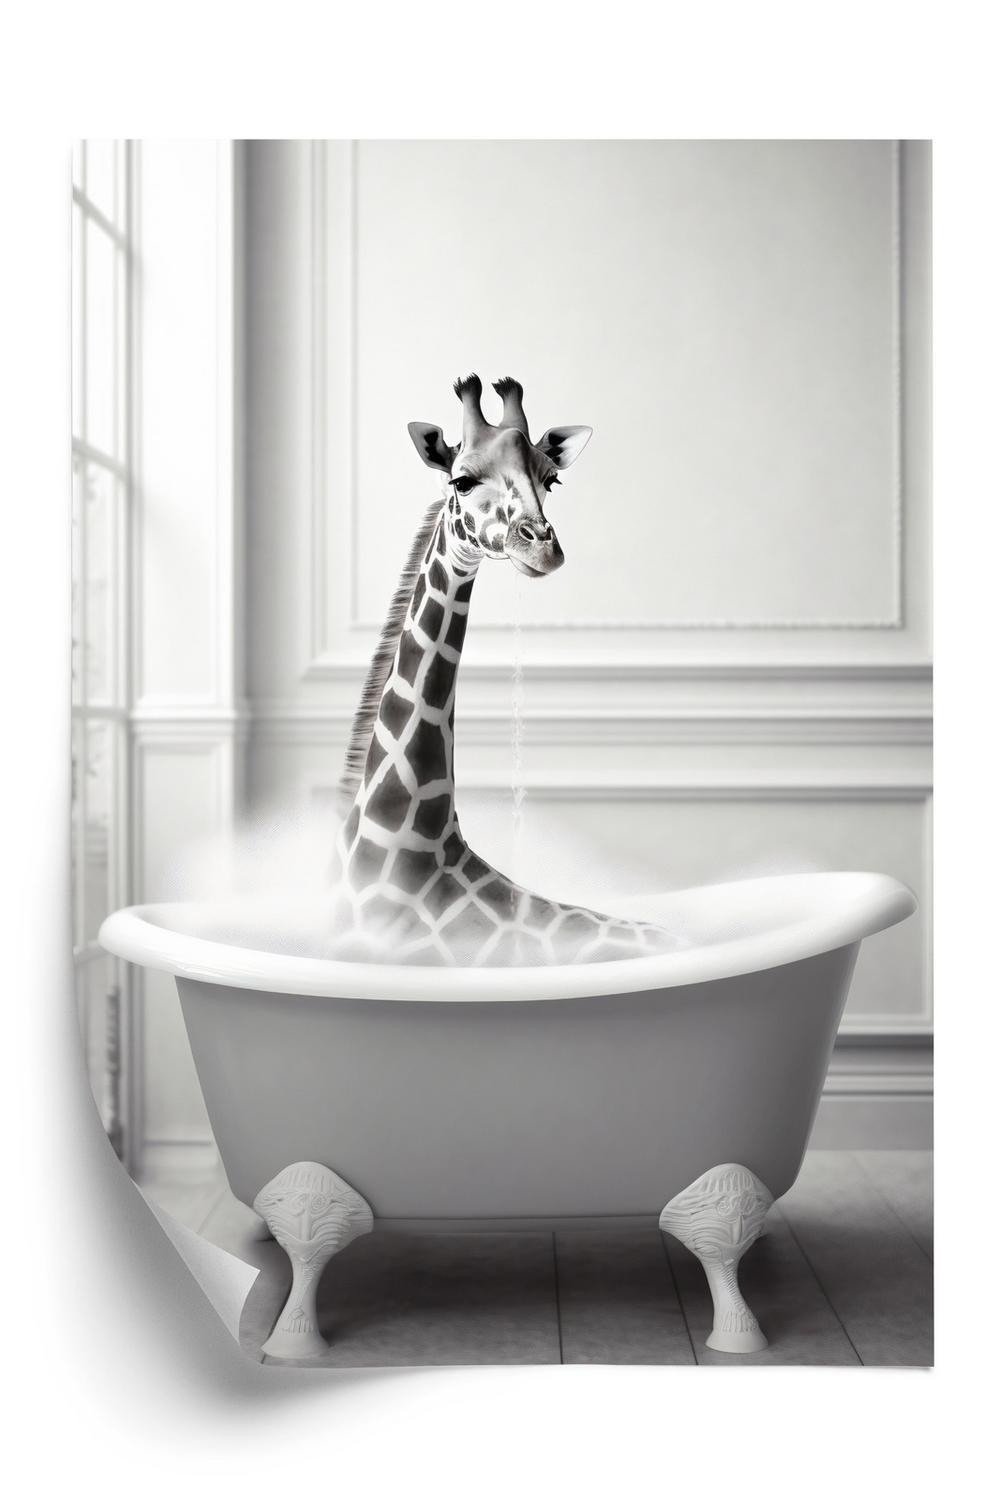 Plakat - Surrealistisk illustration med en giraf i et badekar